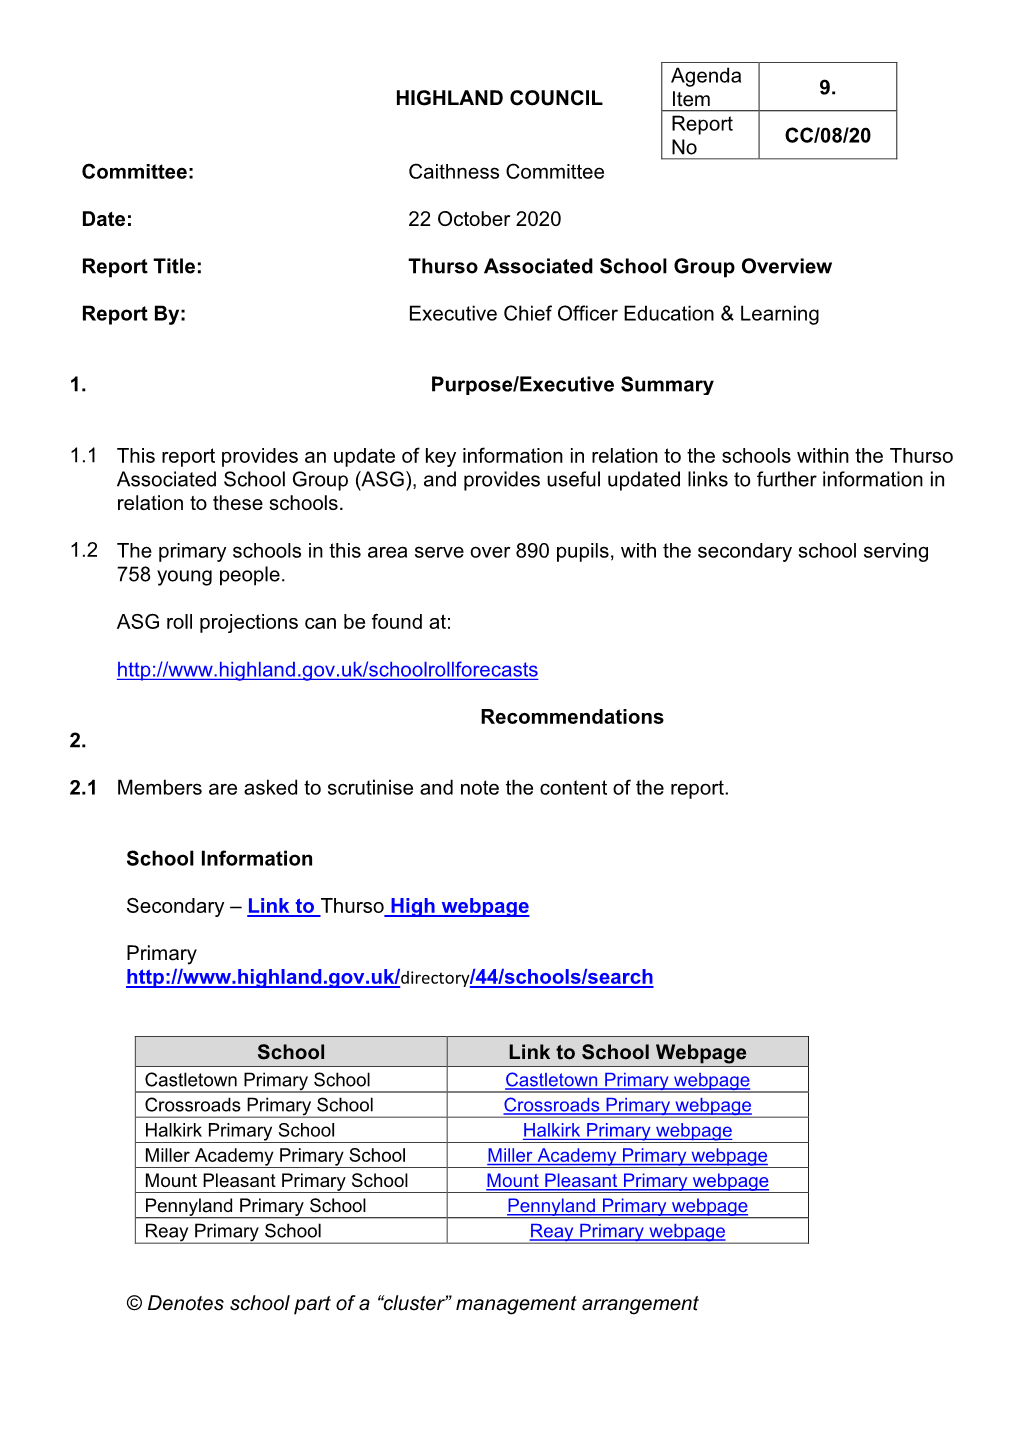 Thurso Associated School Group Overview